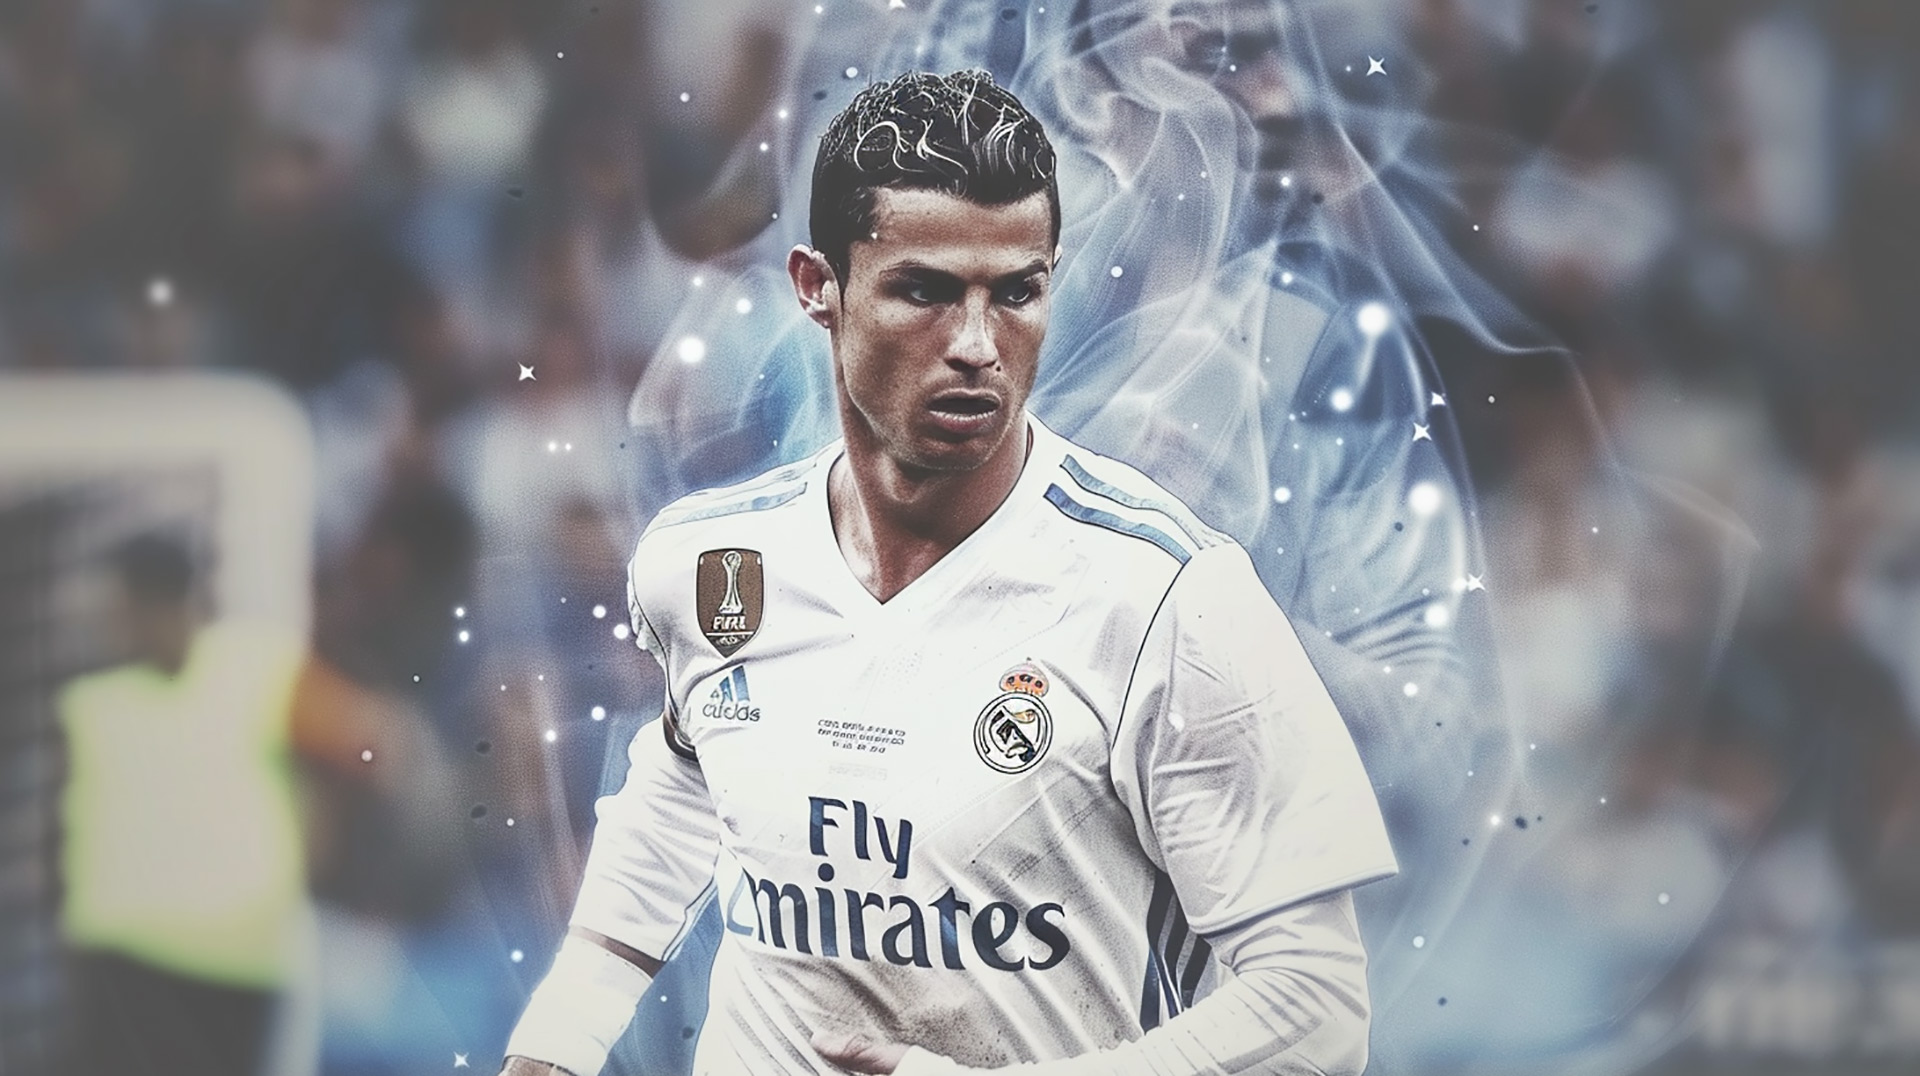 4K Ronaldo Soccer Image: Perfect for Desktop